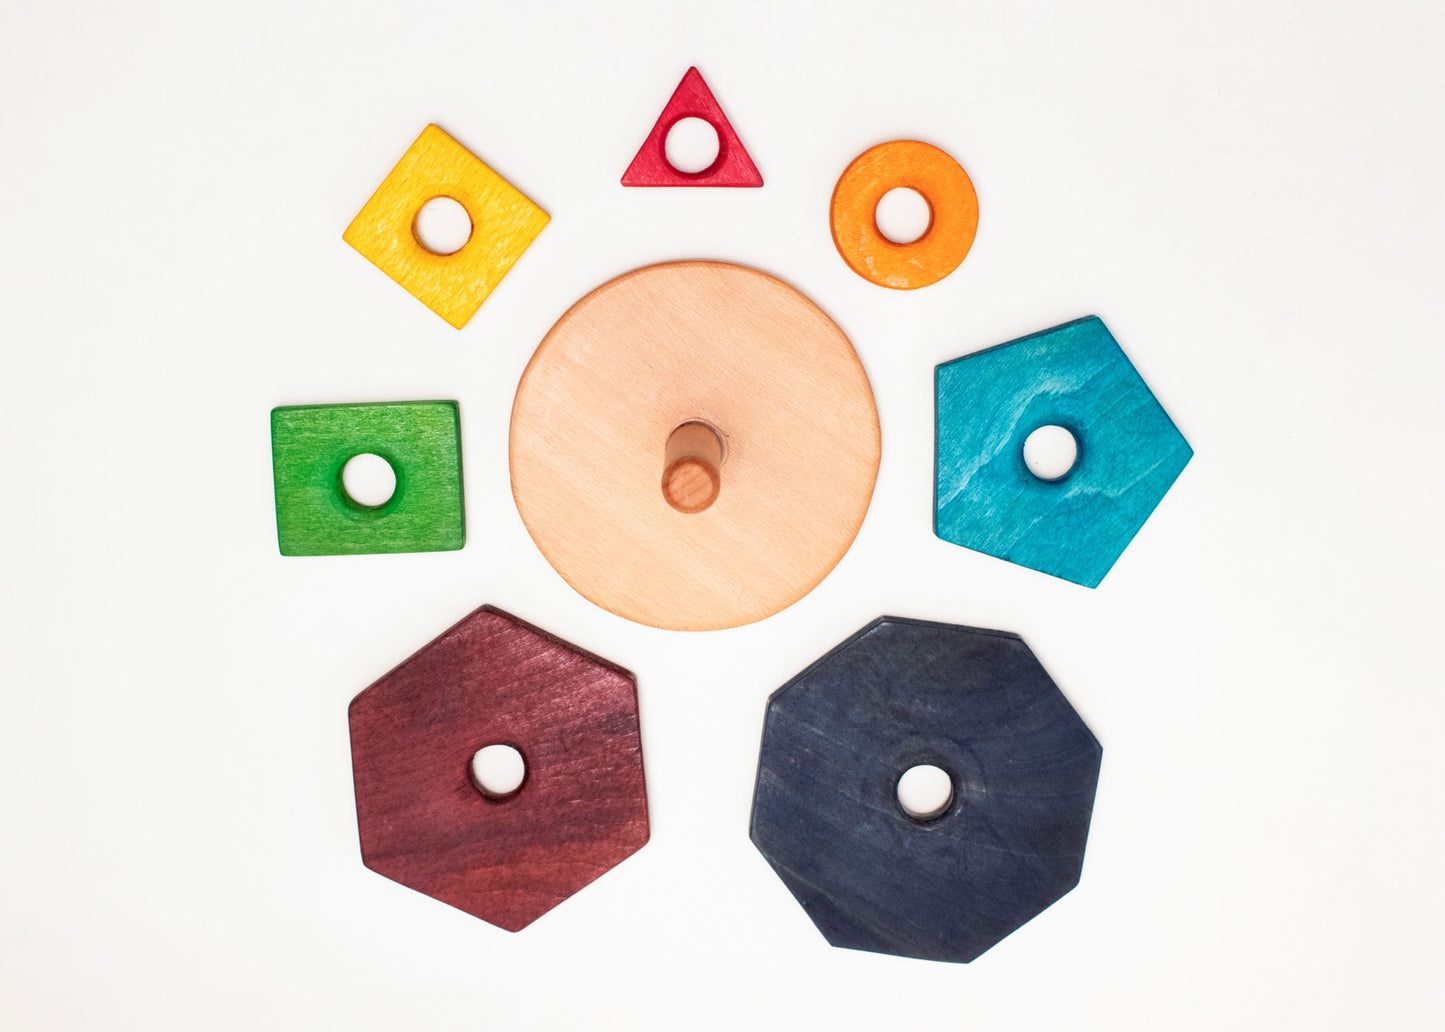 Montessori Inspired Geometric Shapes Stacker